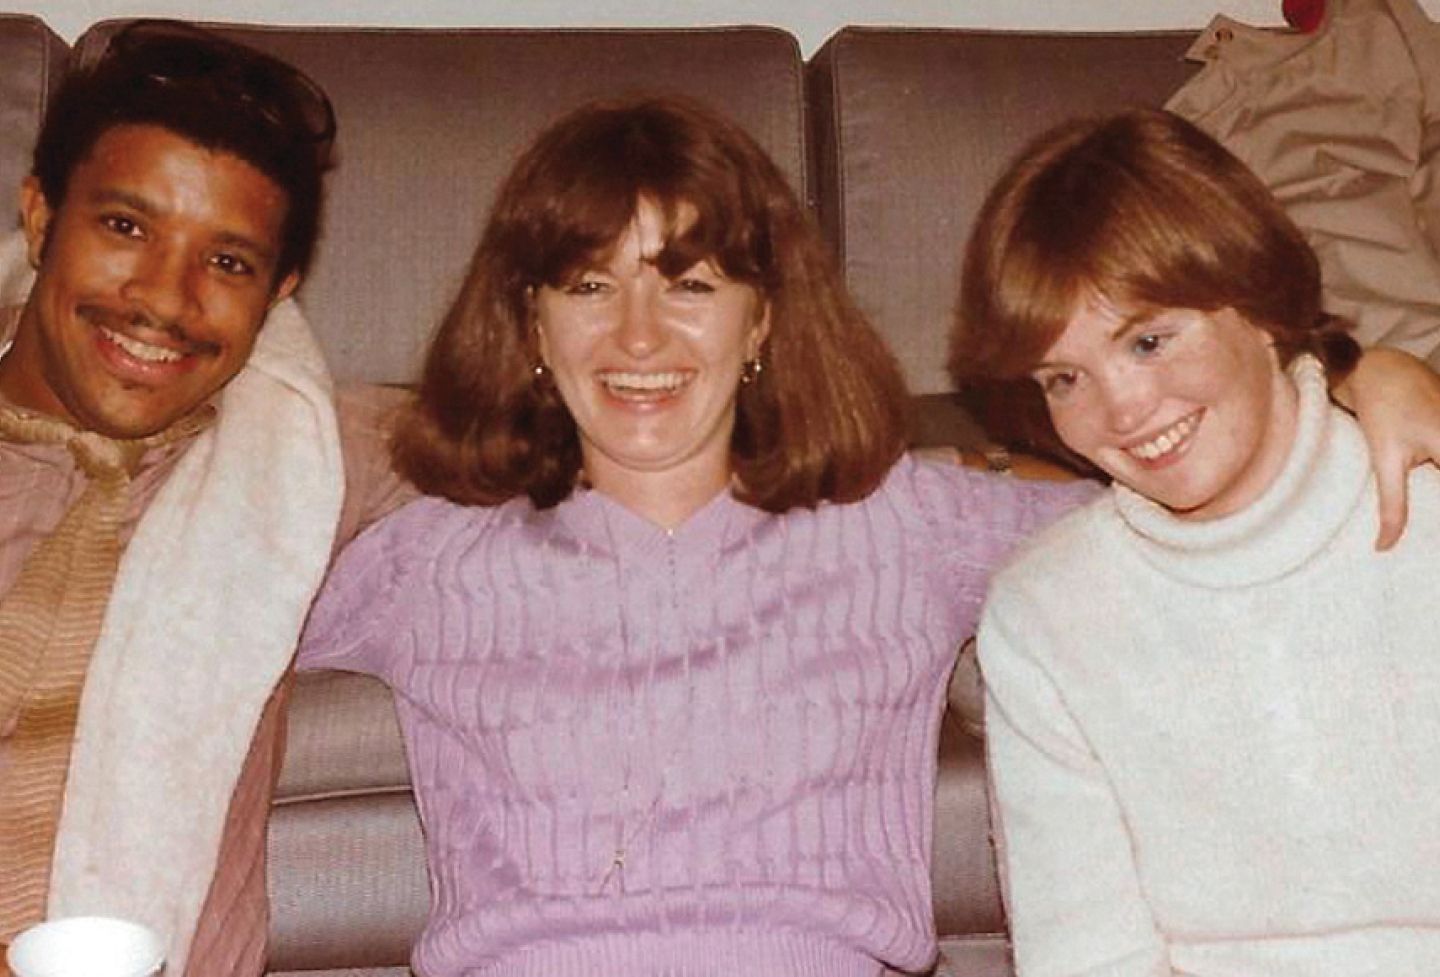 Class of 1986 members David Hicks, Deb Lambert Dean and Mary Beth Sullivan at a party held at Professor Thomas Bergin’s house in 1984. 